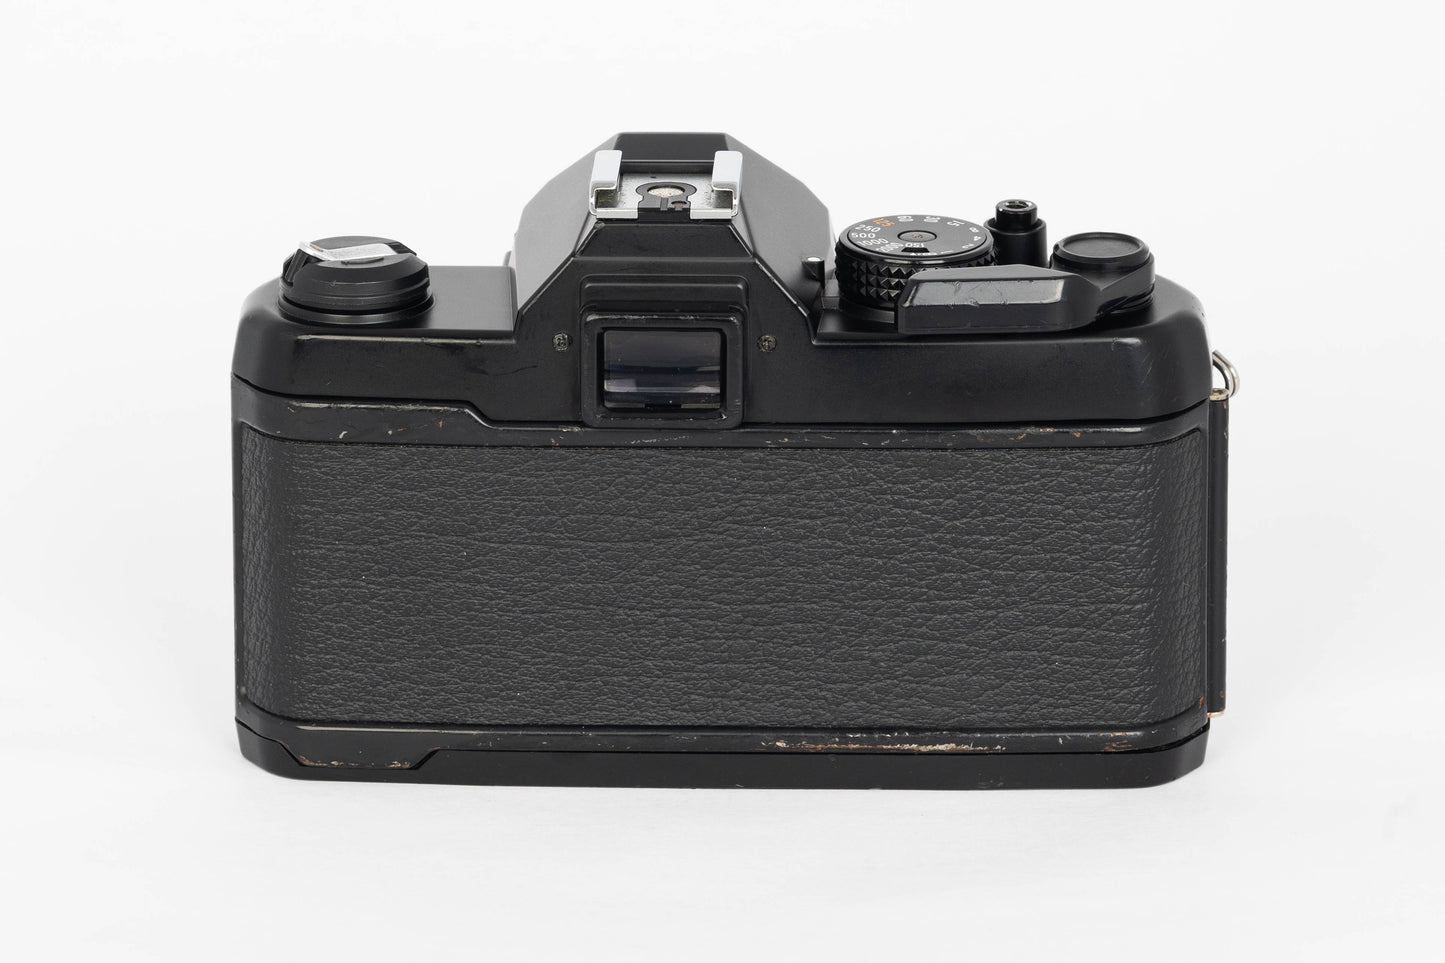 Yashica FX-3 Super 2000 35mm SLR Film Camera Black Body